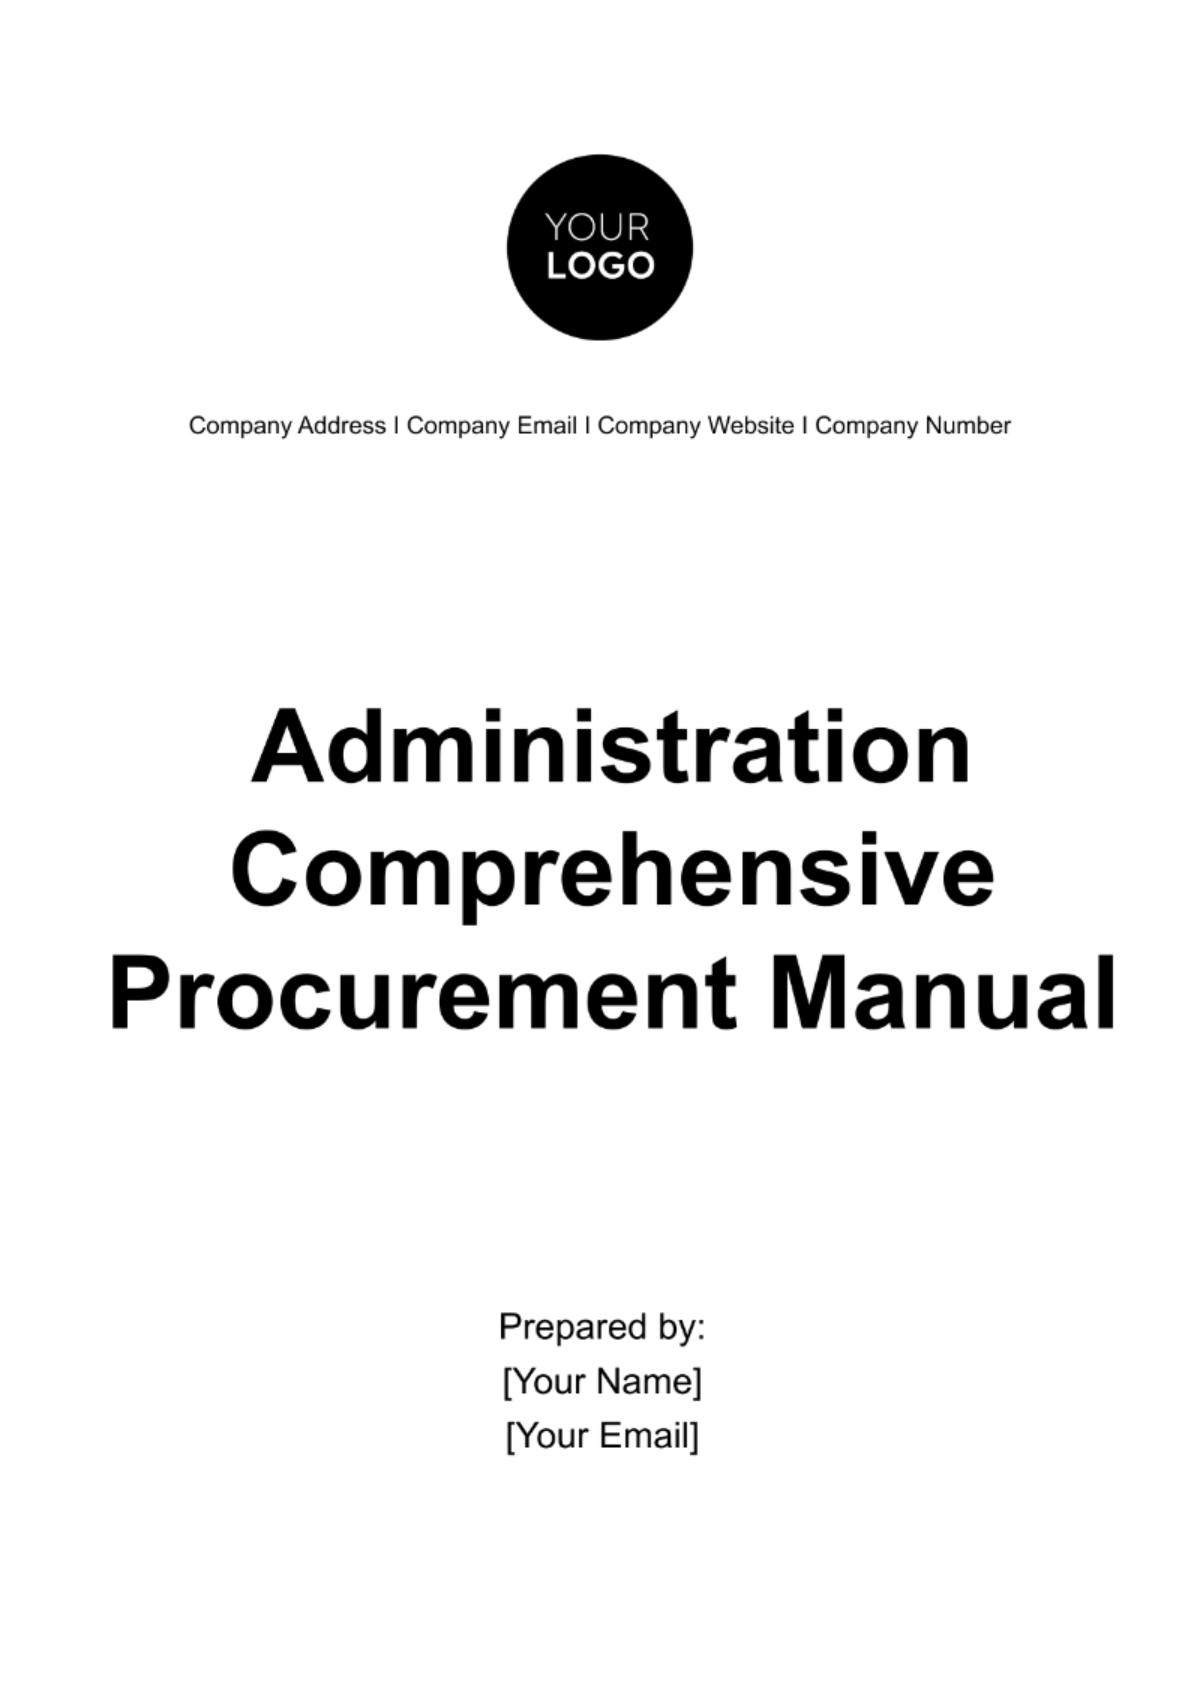 Administration Comprehensive Procurement Manual Template